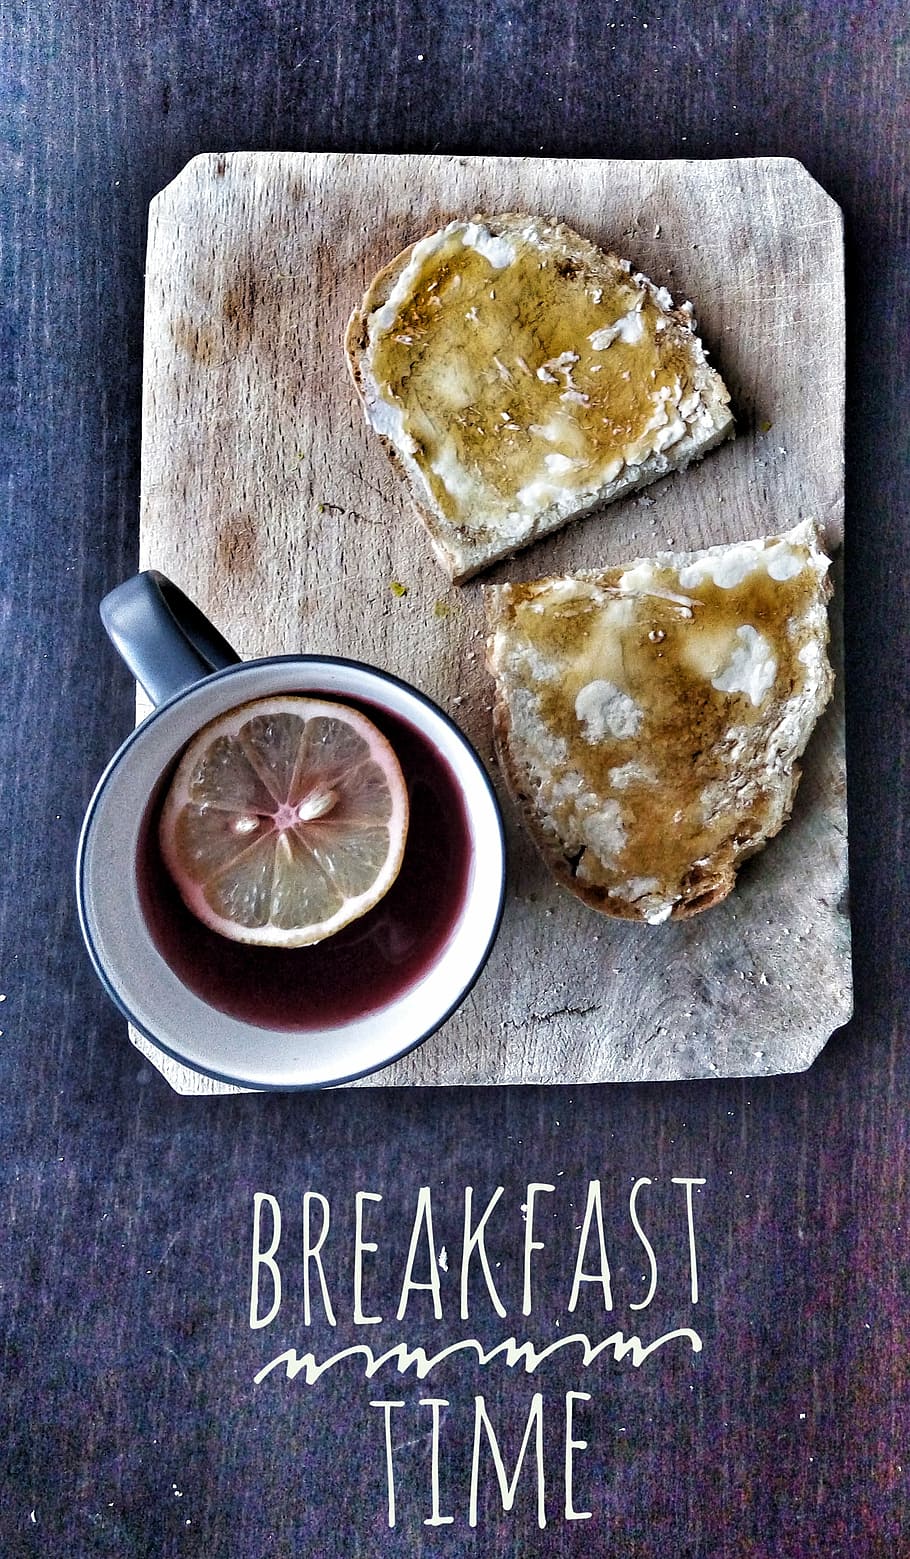 bread, mug, filled, red, liquid, top, wood slab, breakfast time text overlay, breakfast, tea